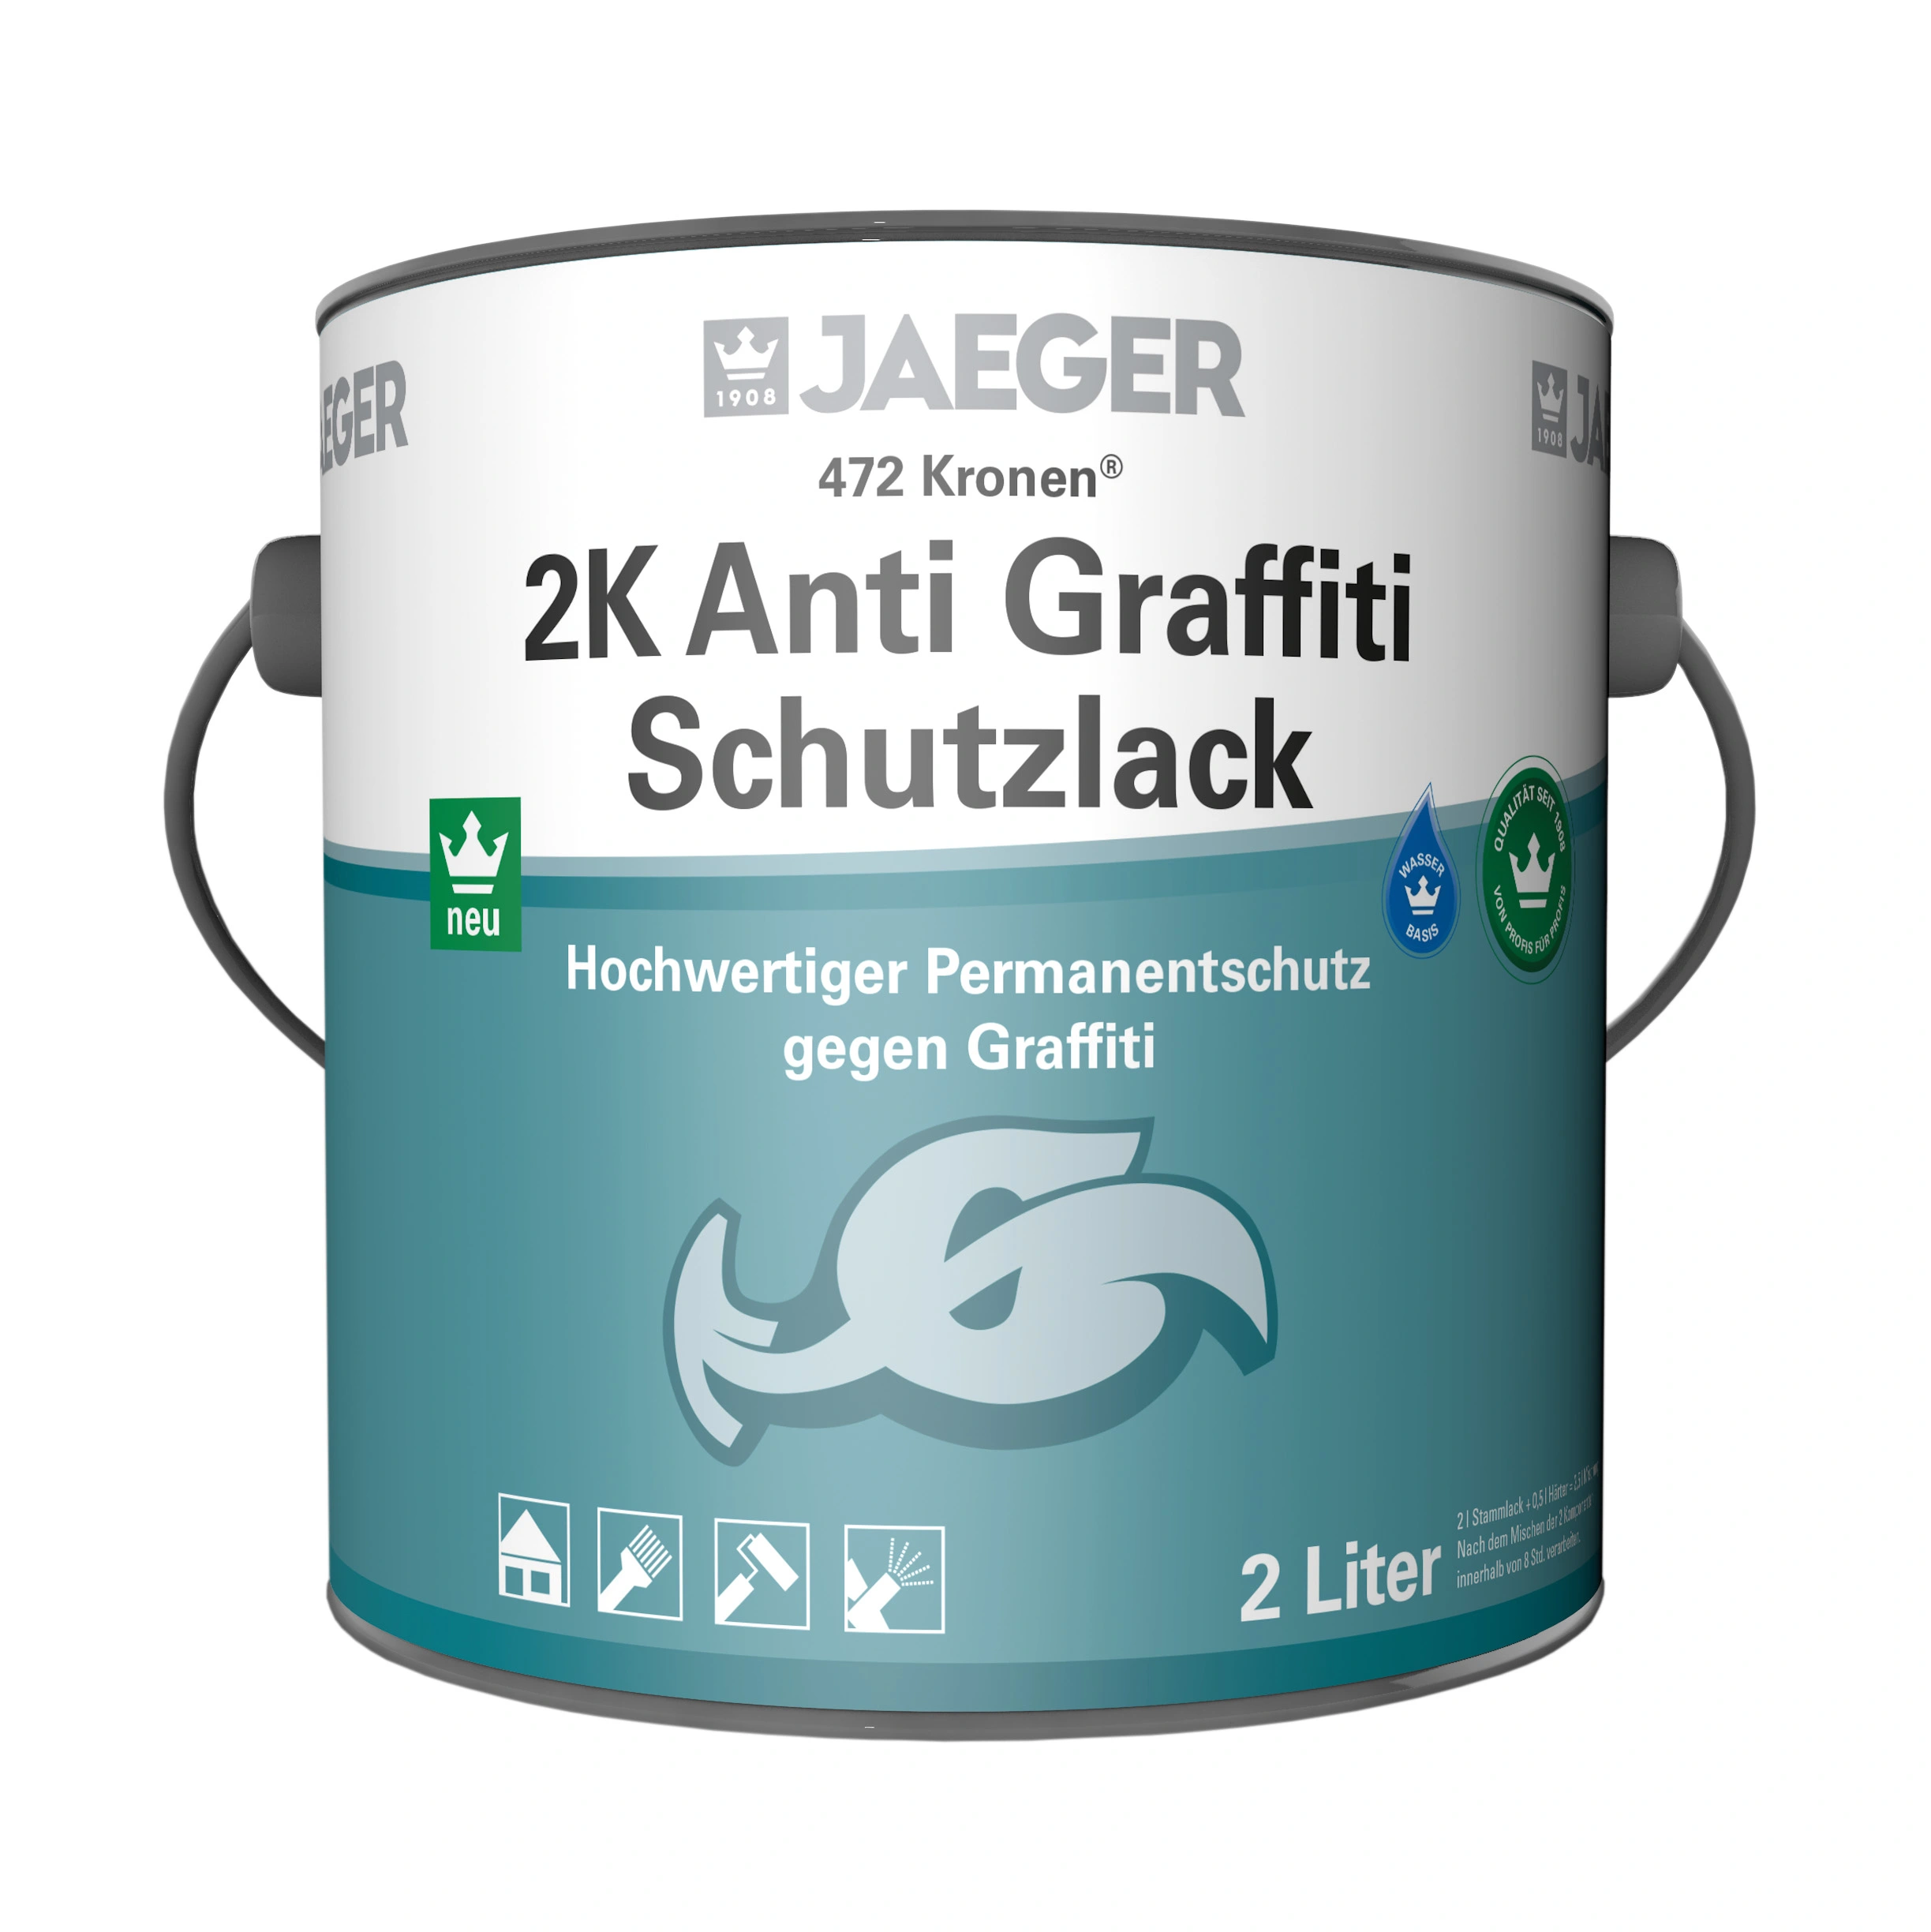 2K Anti Graffiti Schutzlack permanent 472